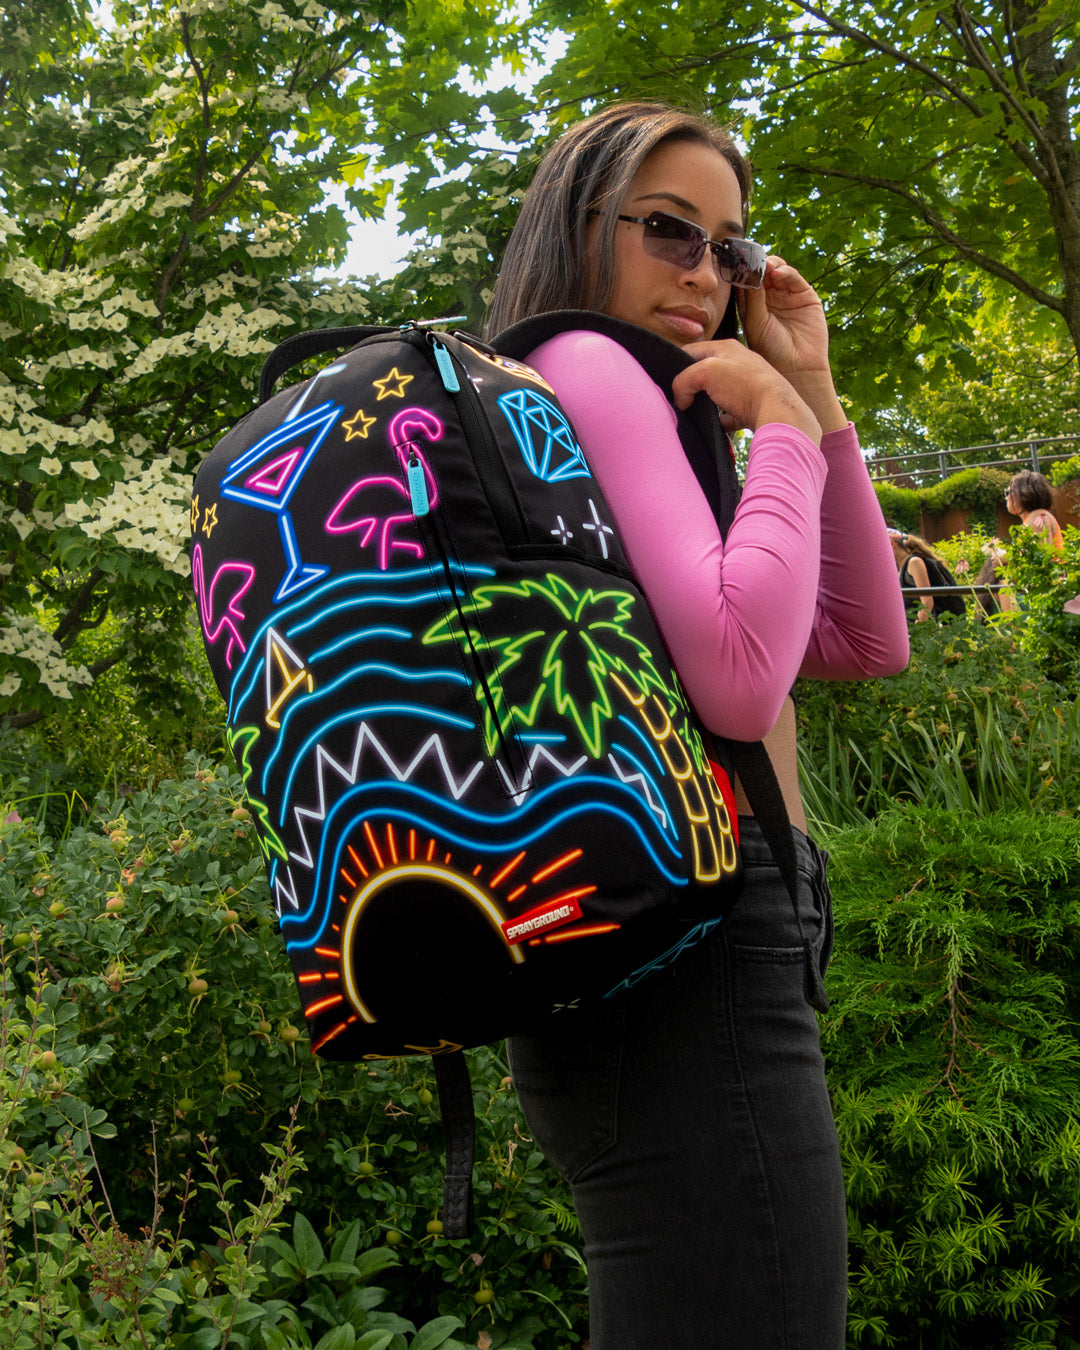 Sprayground Fabric Backpacks